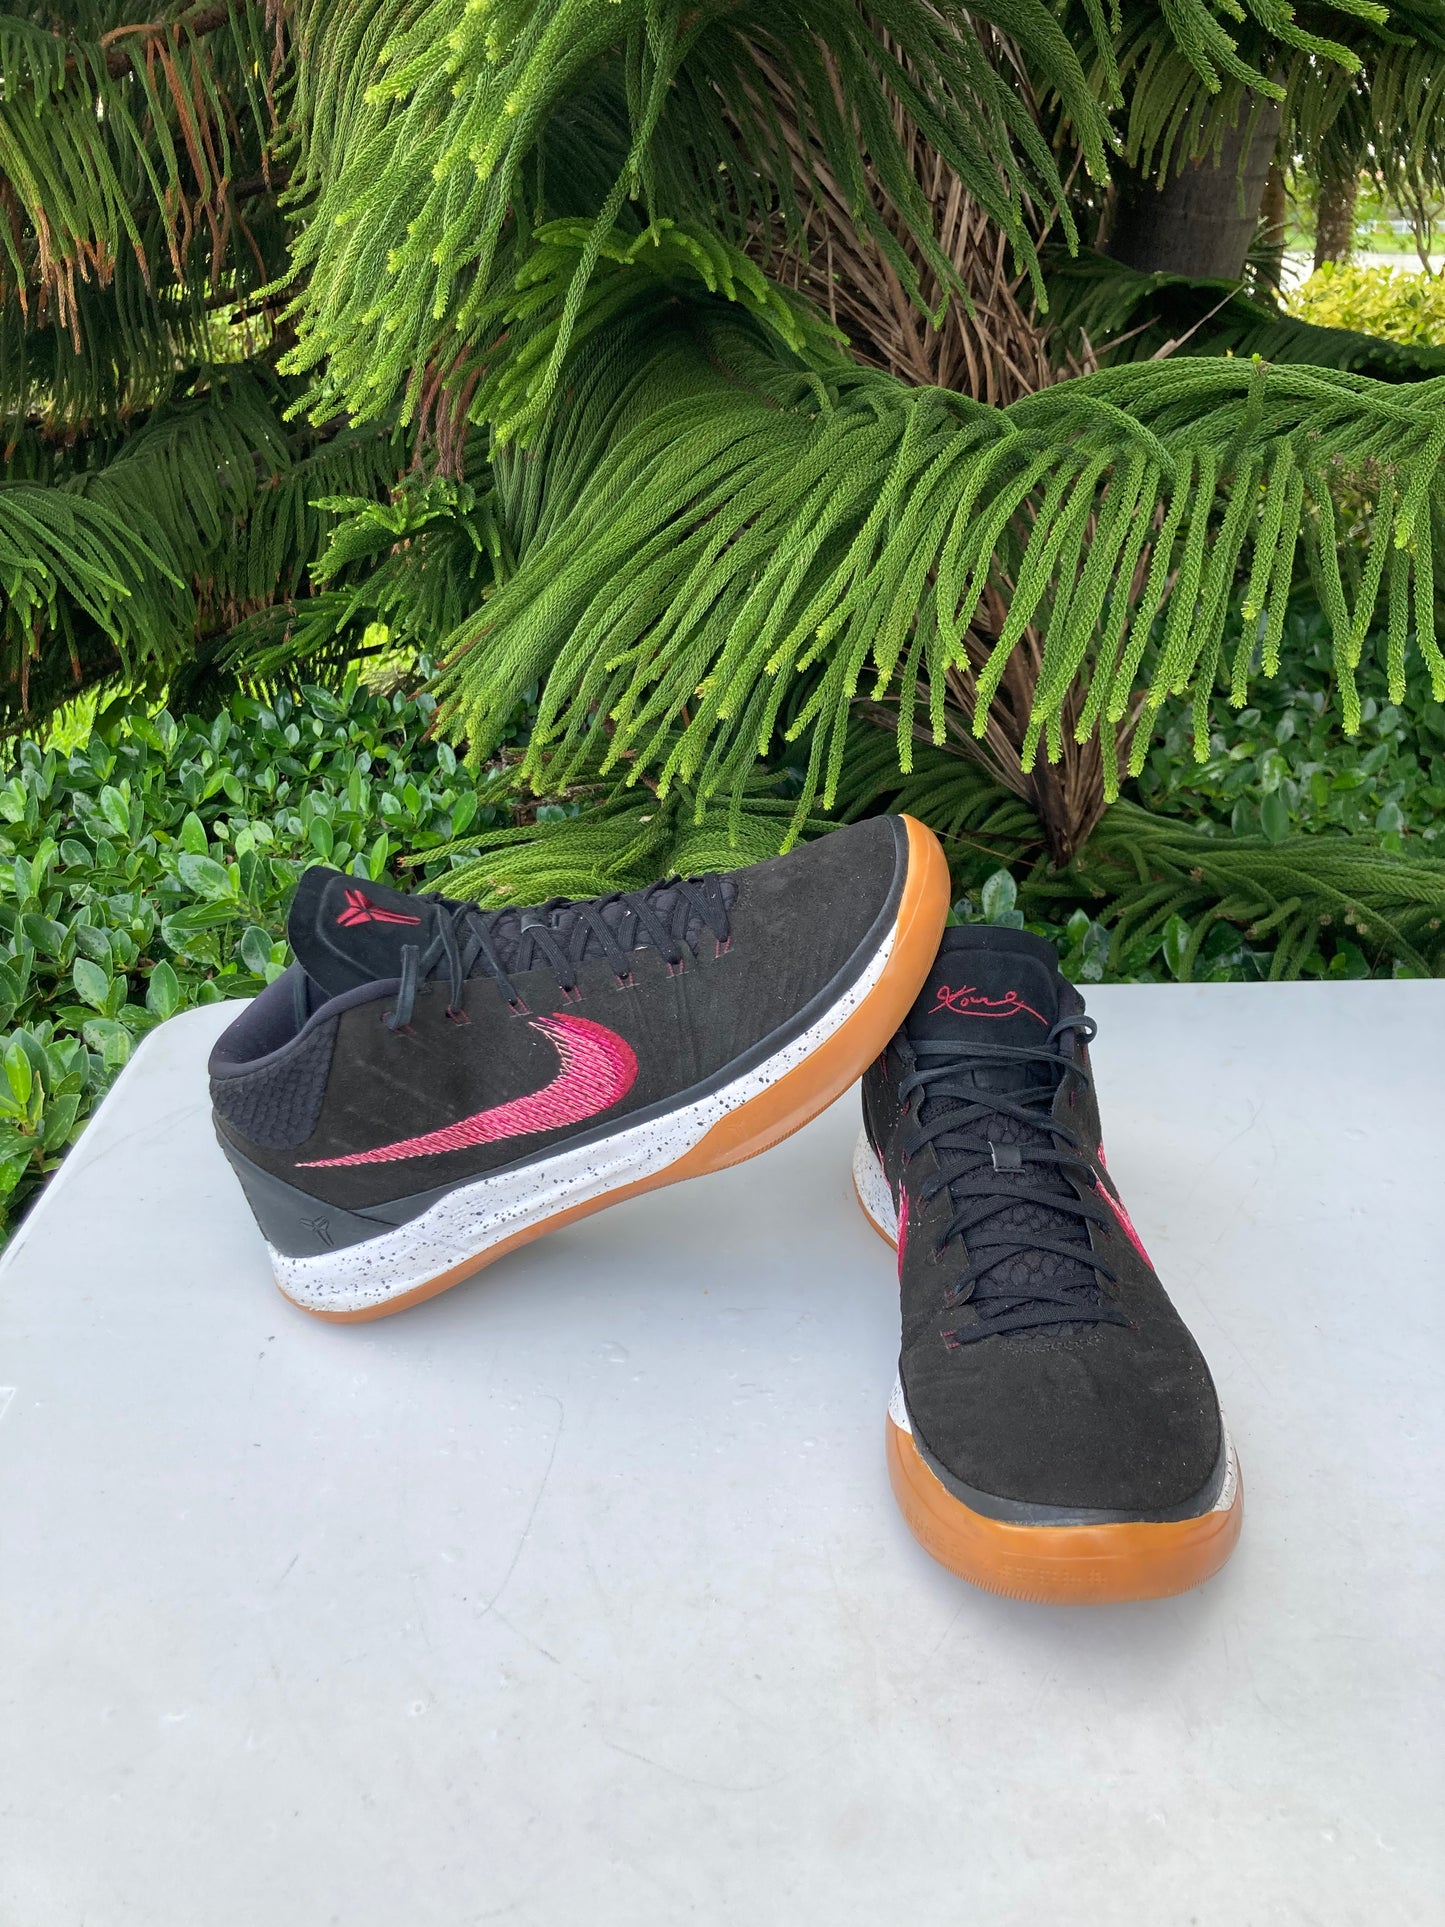 Nike Kobe A.D. Mid Black Gum 2017 Basketball Shoes